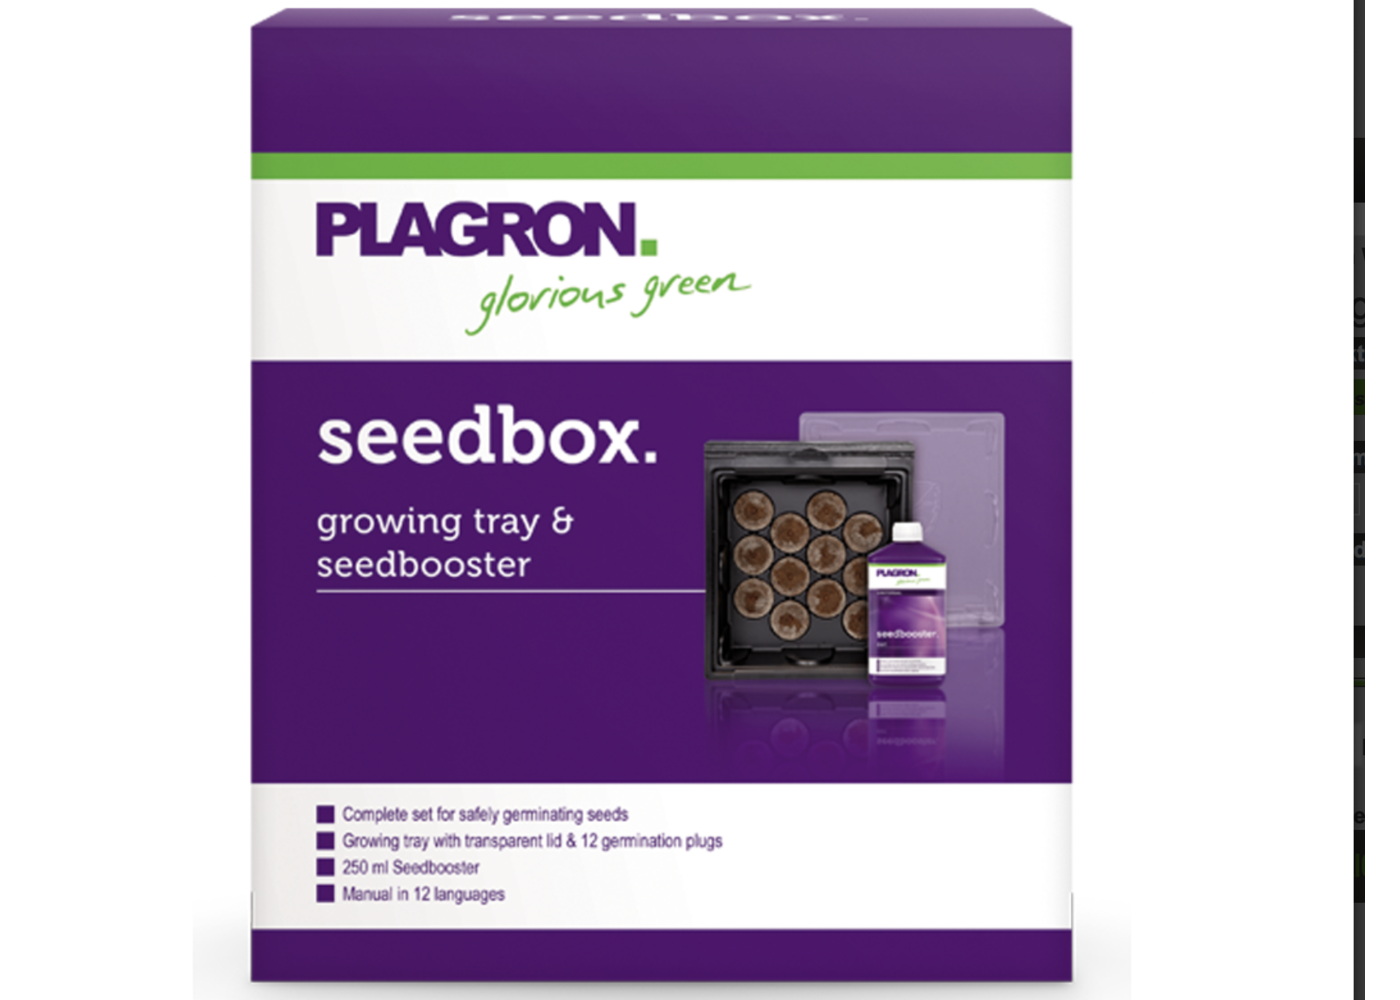 Plagron Seedbox